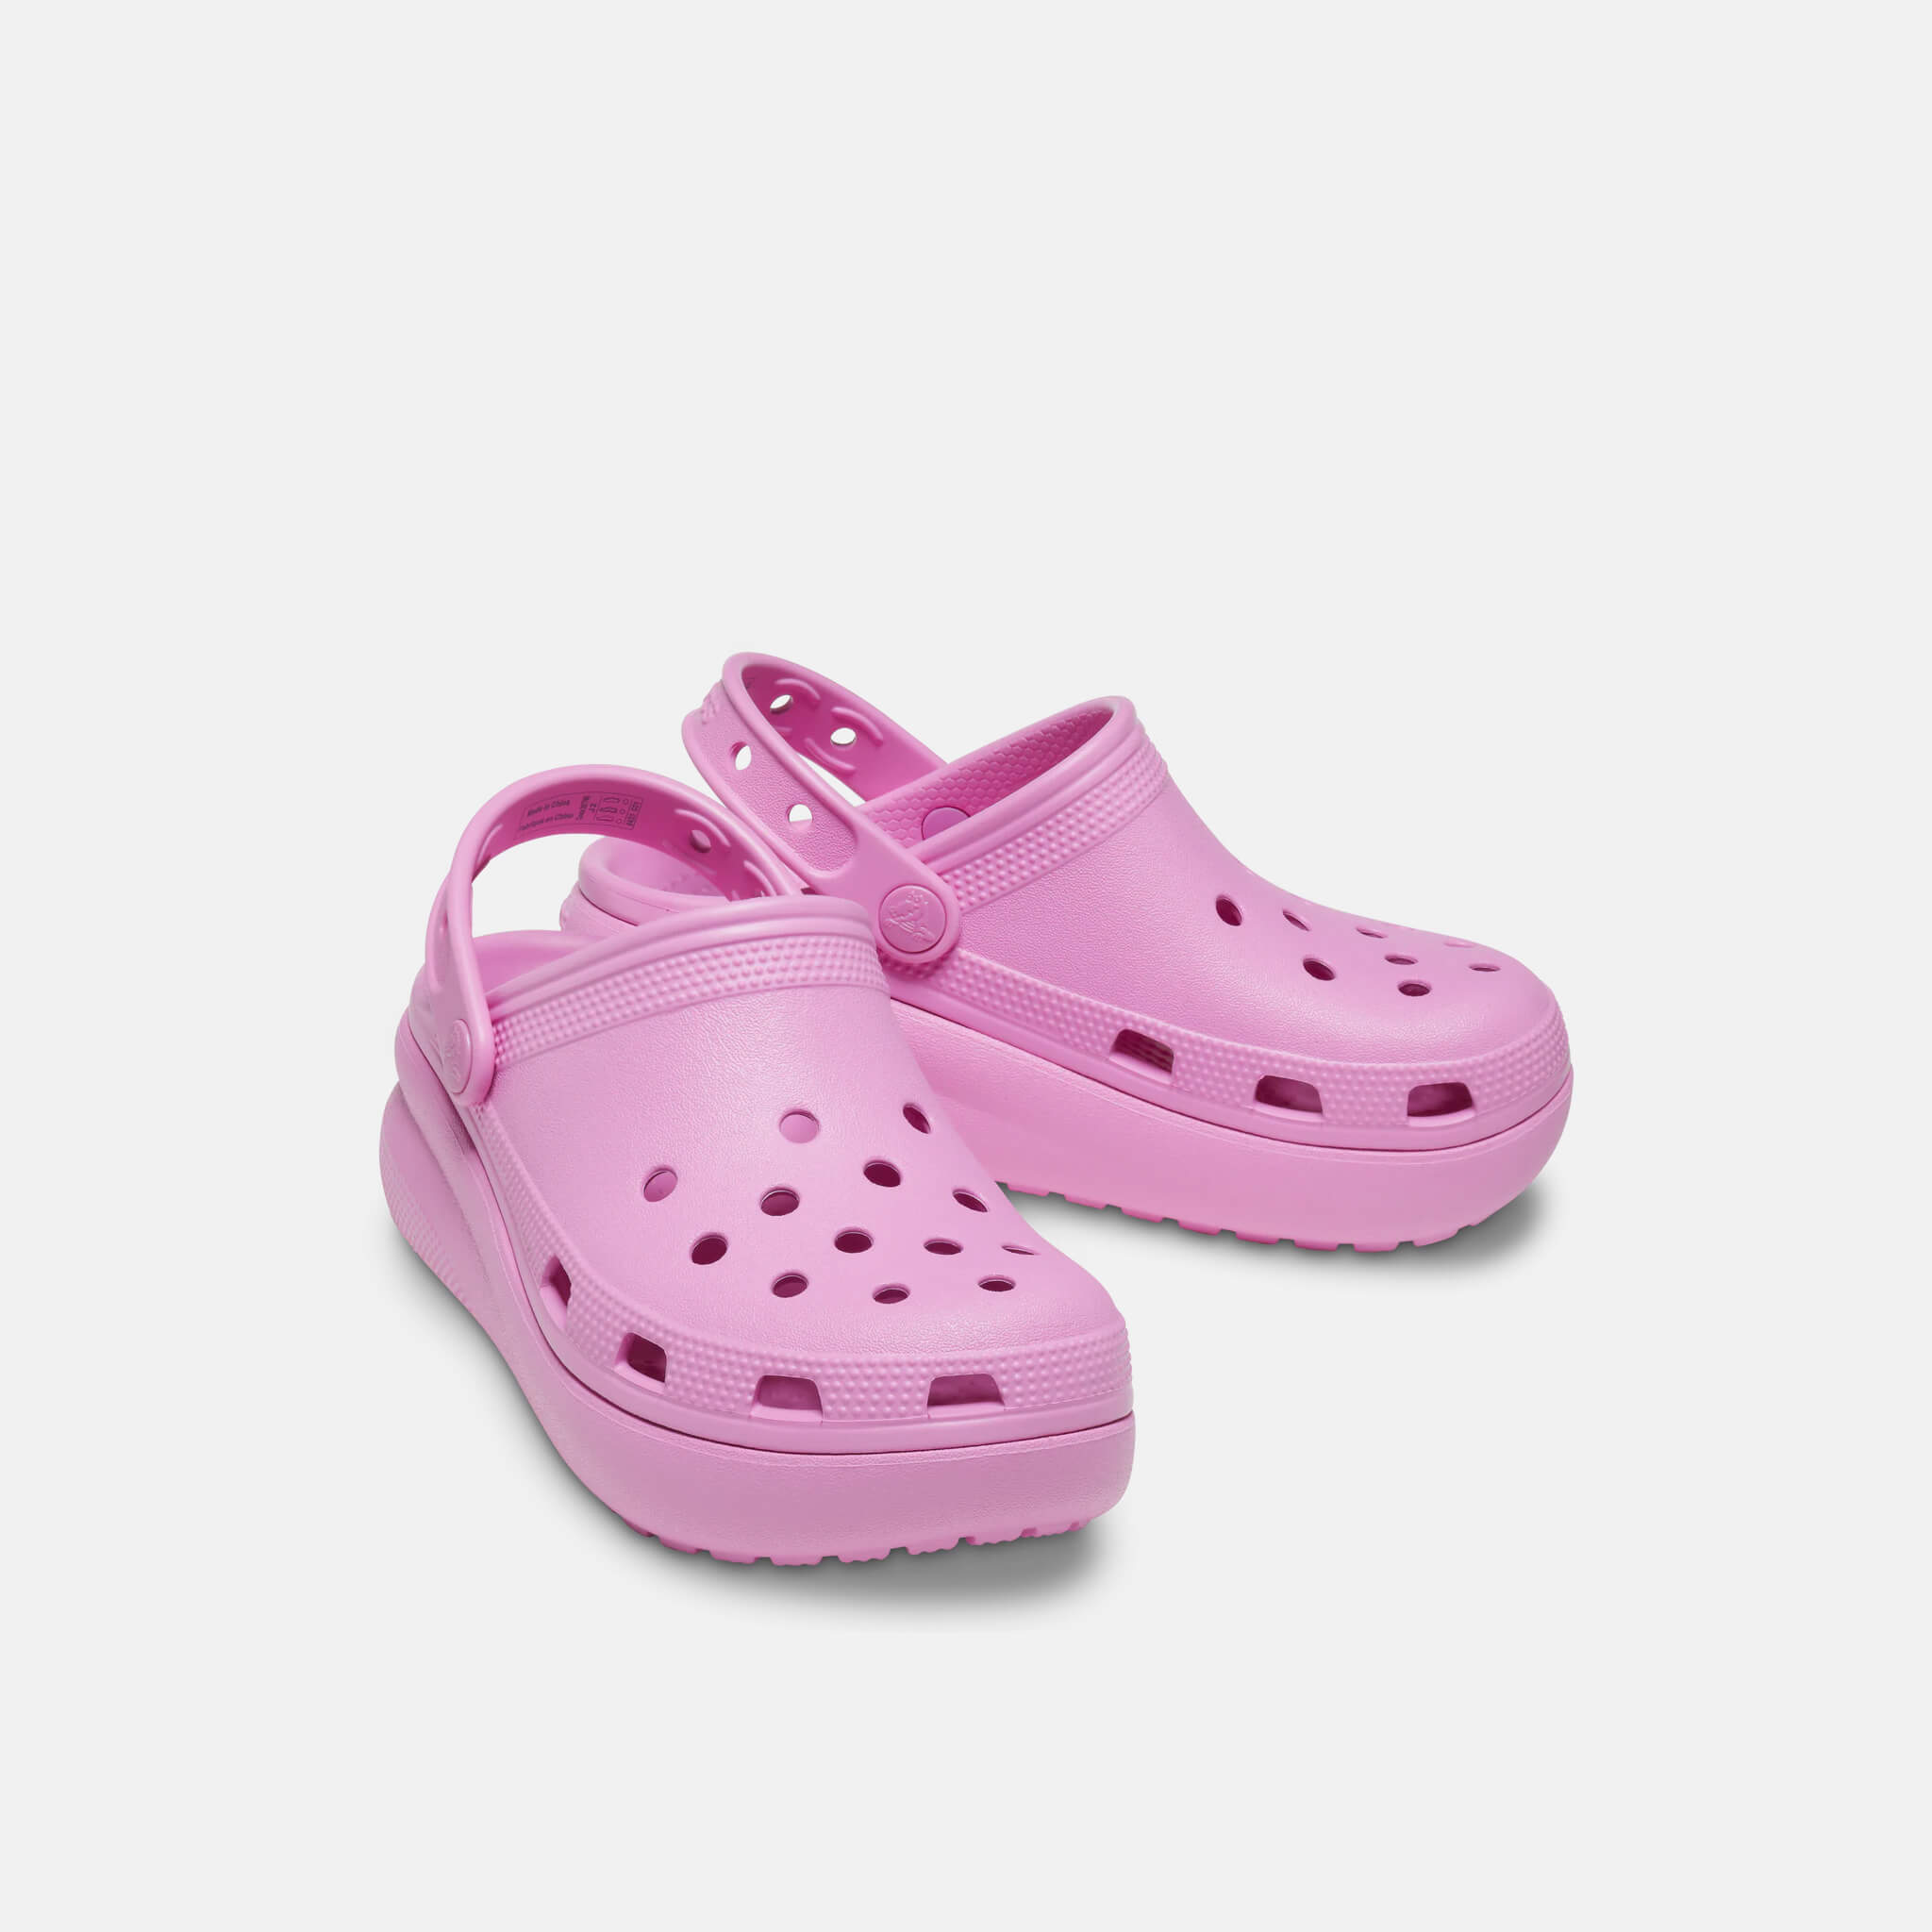 Classic Crocs Cutie Clog K Taffy Pink